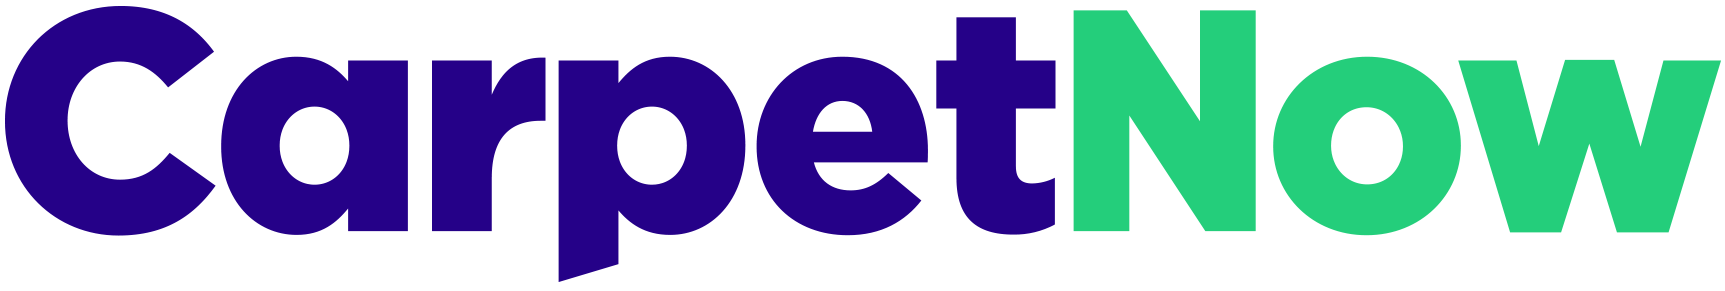 Carpet Now Logo